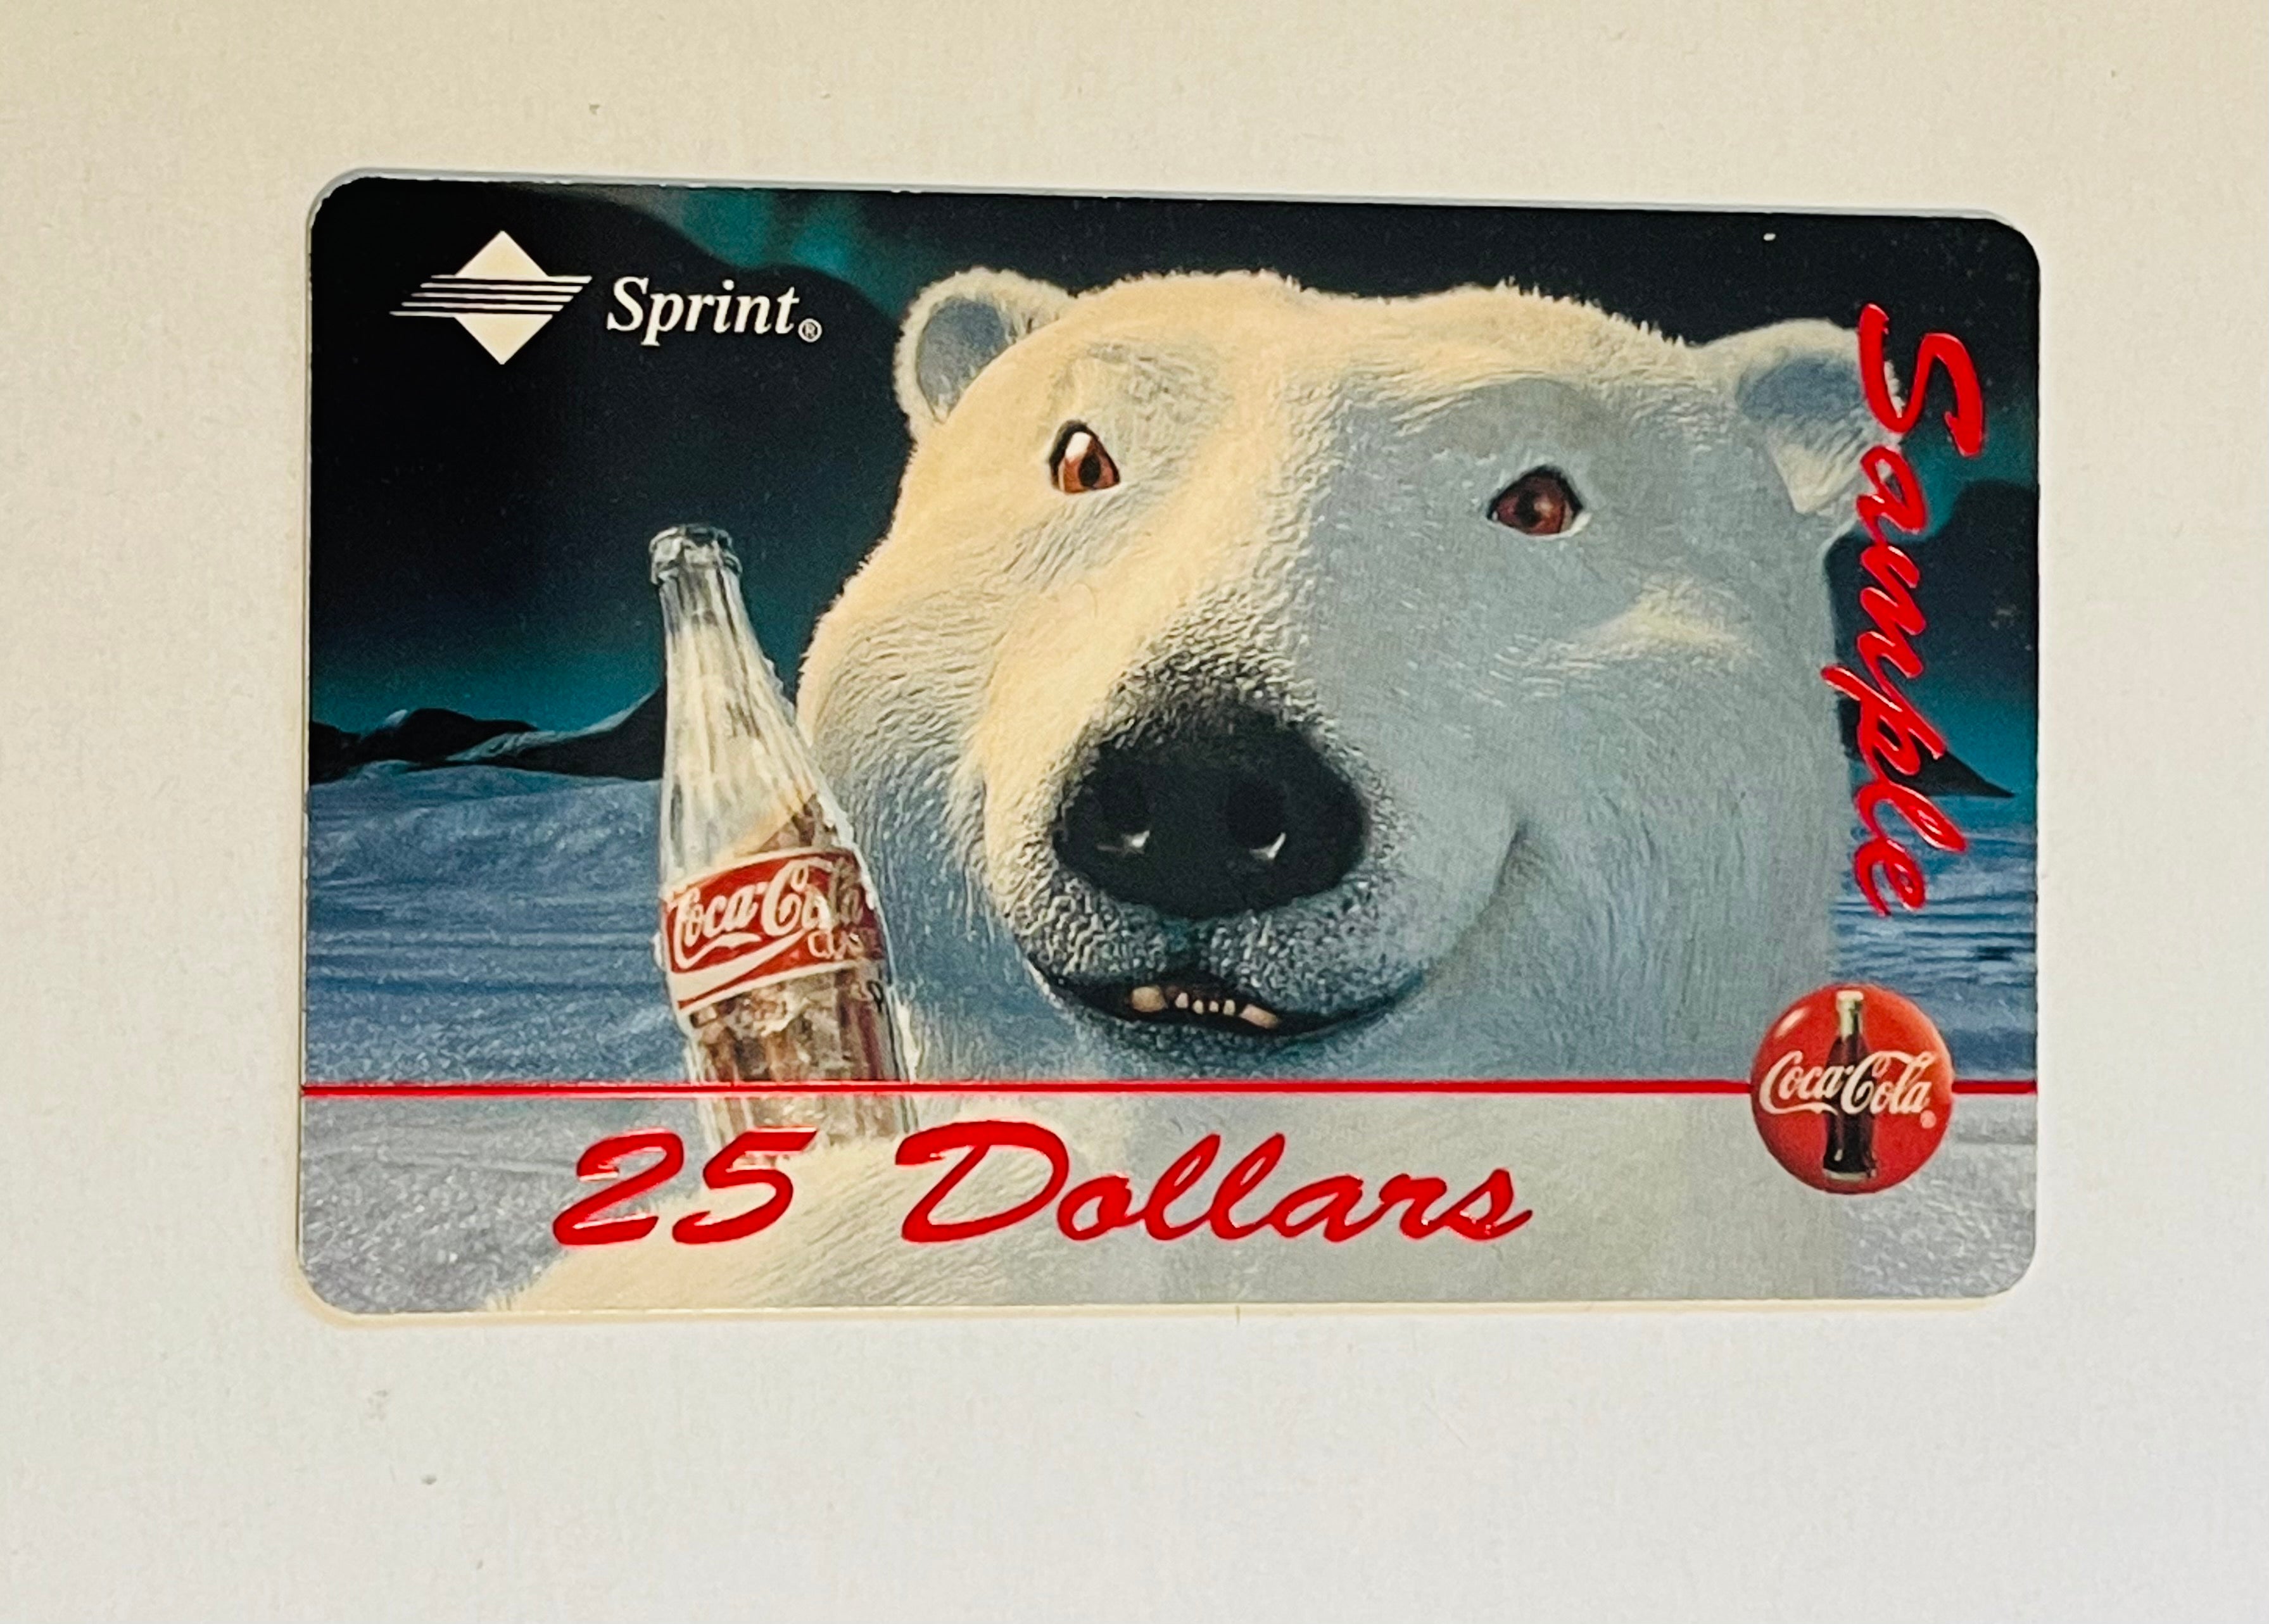 Coca-Cola Sprint phone card 1995